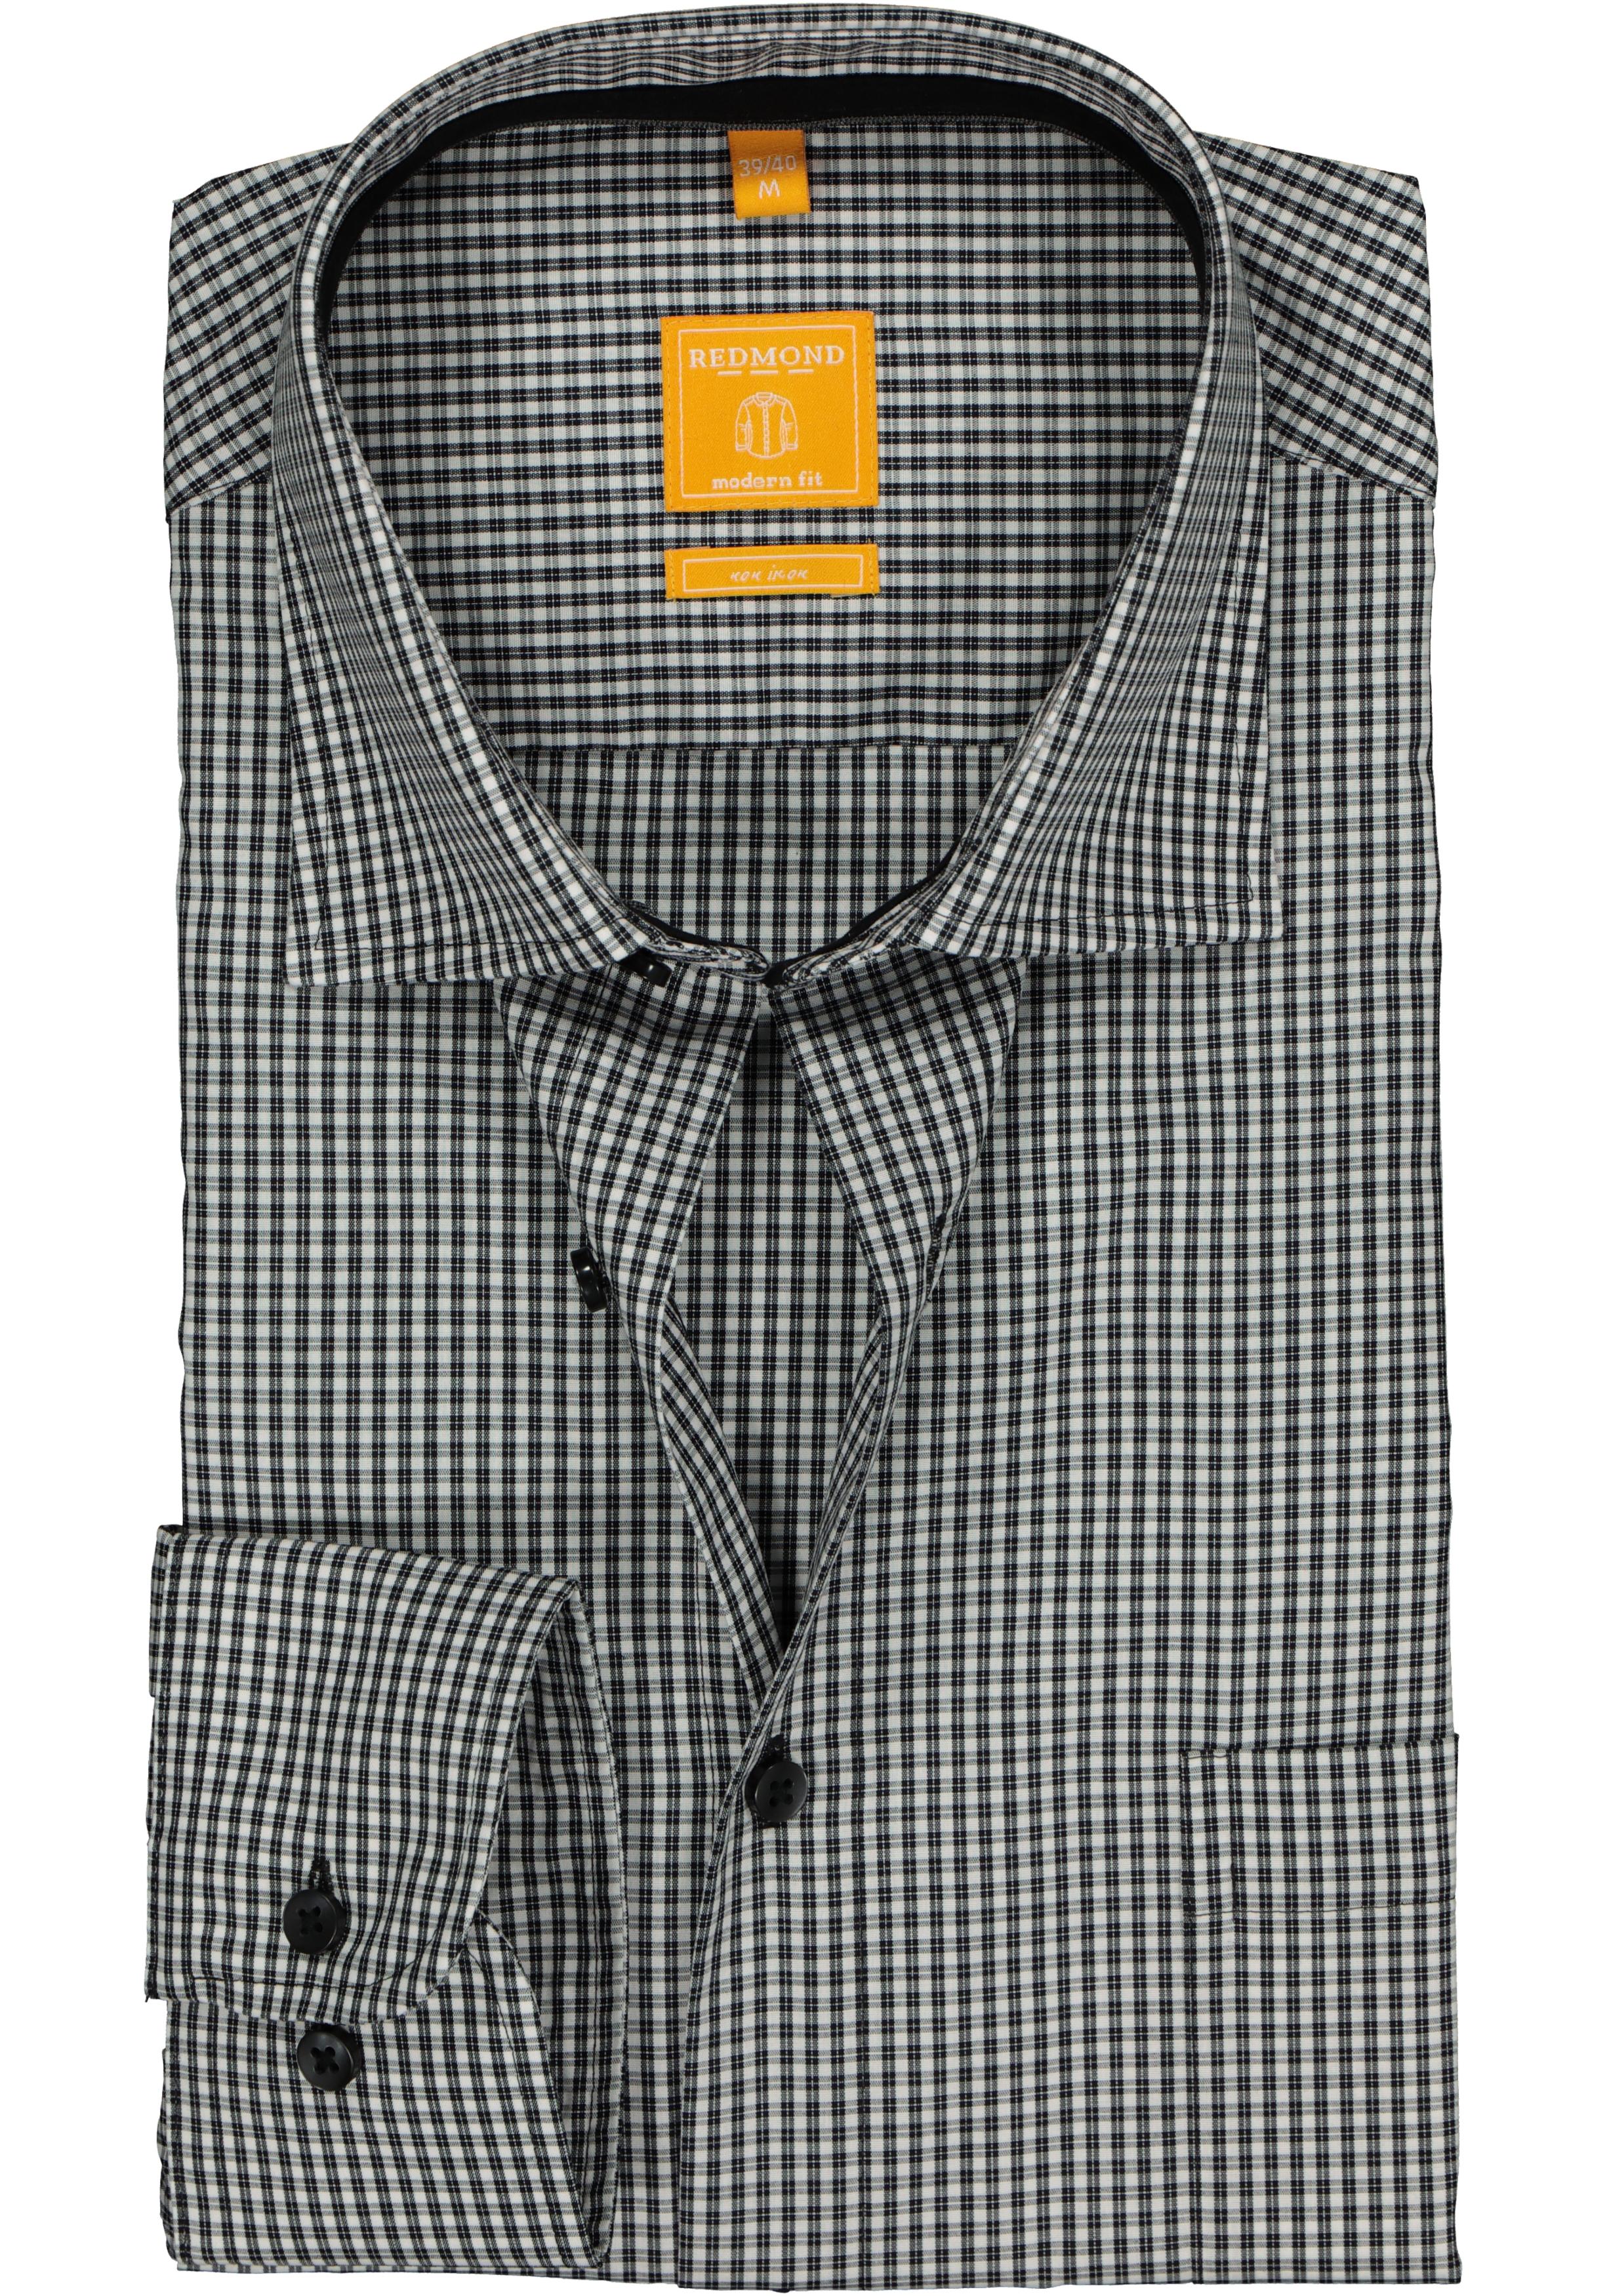 kromme aanpassen controleren Redmond modern fit overhemd, zwart-wit geruit (contrast) - Zomer SALE tot  50% korting